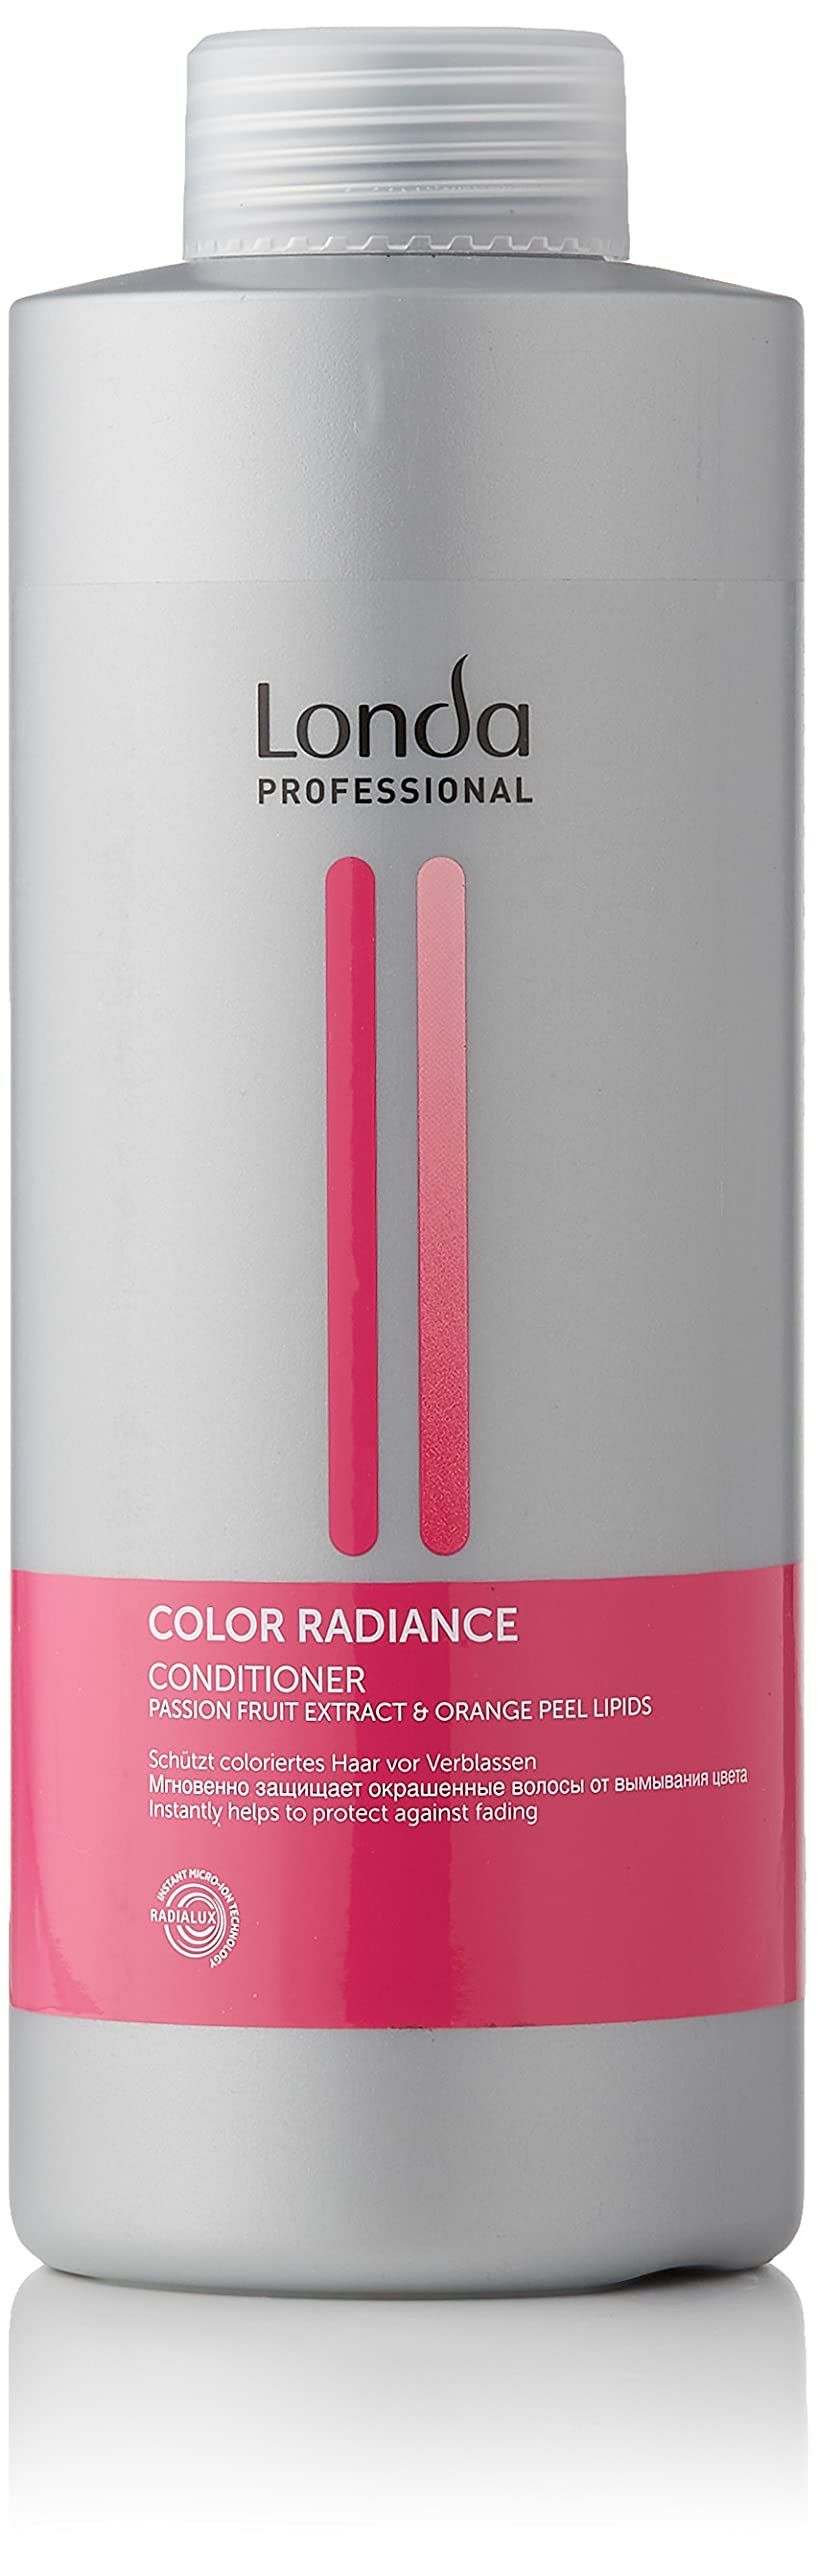 Londa Color Radiance Conditioner 1L